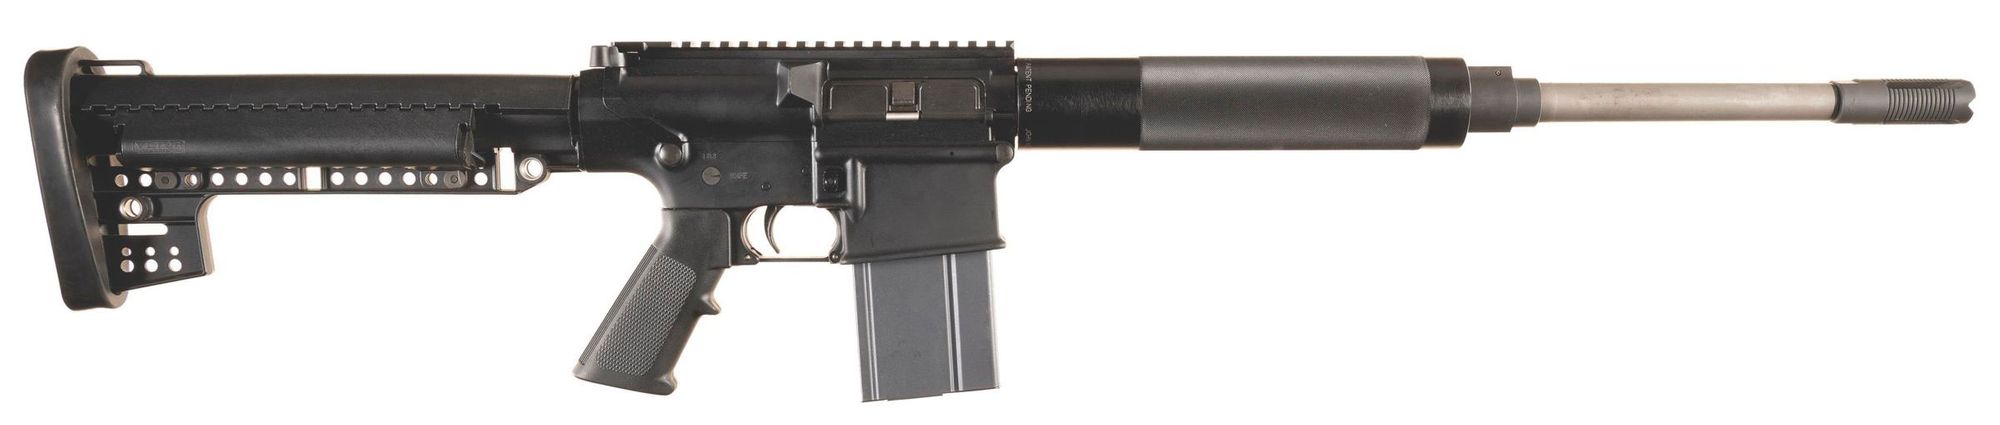 Lot 4789: ArmaLite-Noveske AR-10A4 Semi-Automatic Rifle